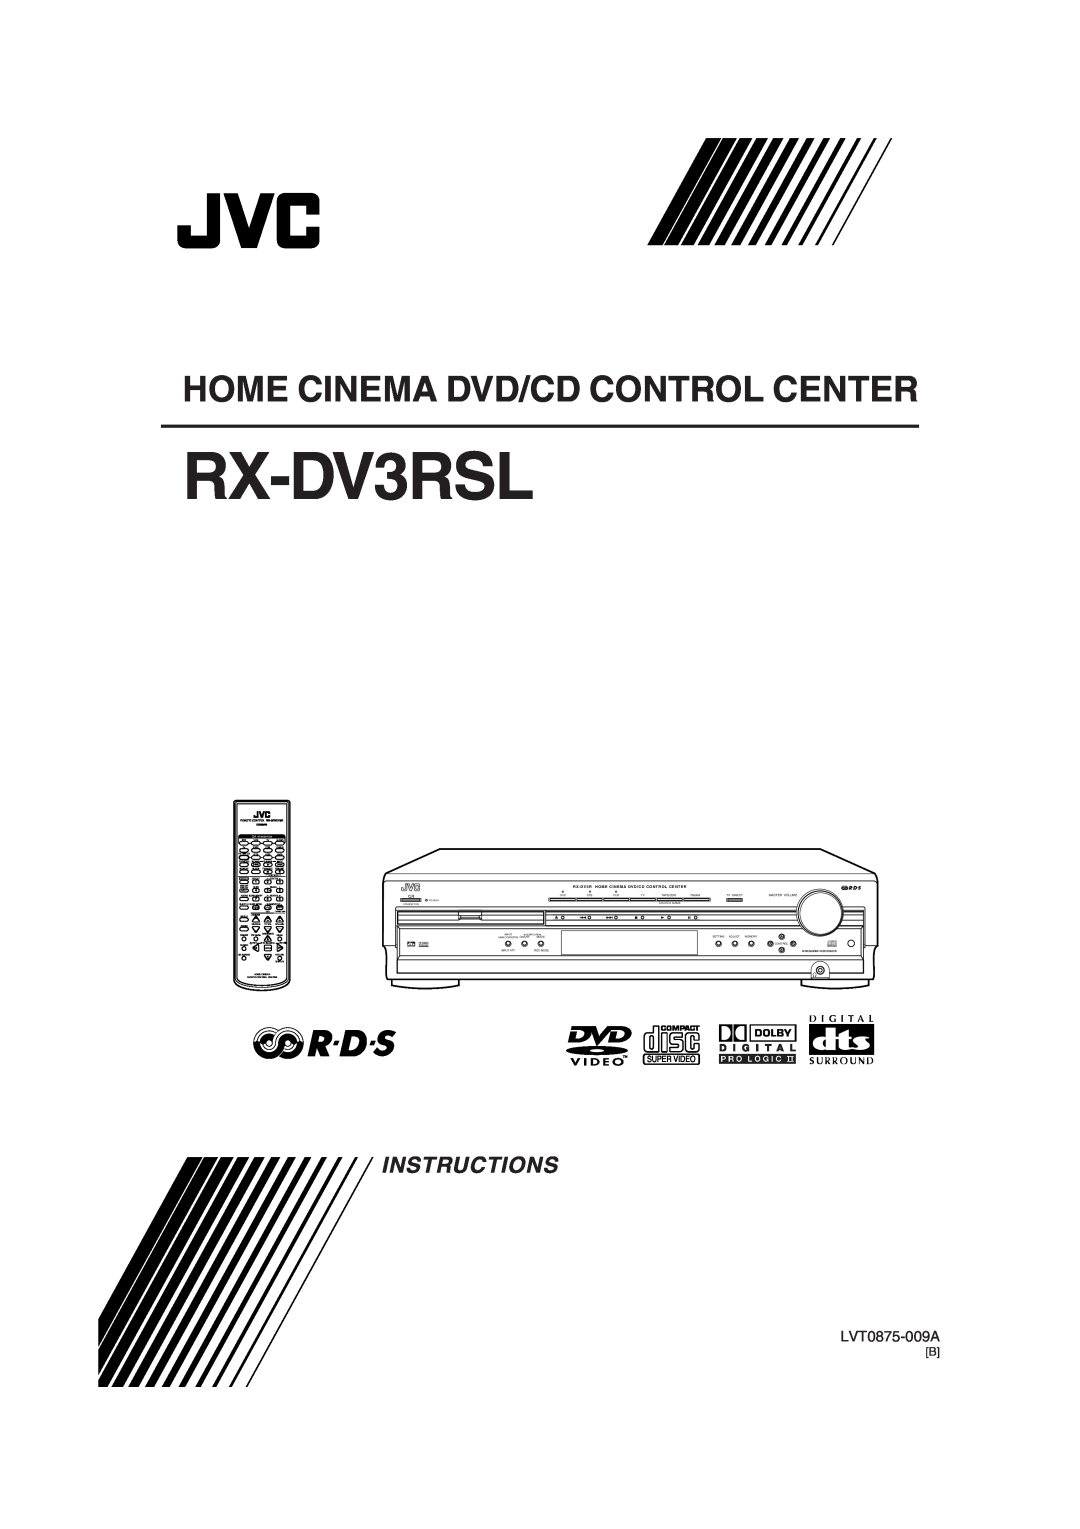 JVC RX-DV3RSL manual Home Cinema Dvd/Cd Control Center, Instructions, LVT0875-009A, Tape/Cdr, Fm/Am, Source Name, Sound 